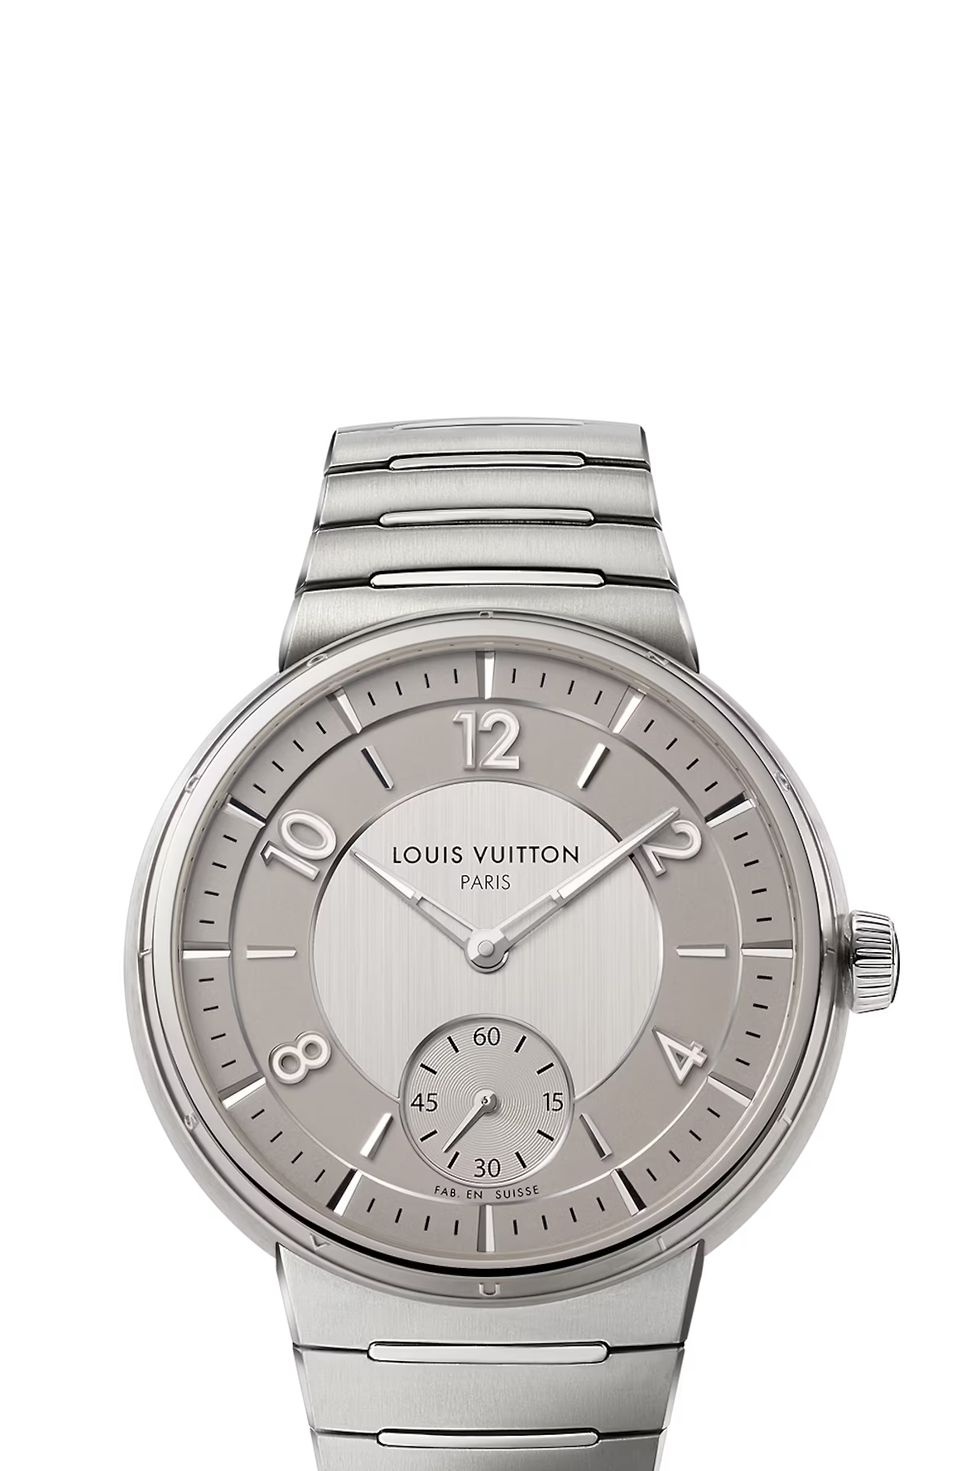 Louis Vuitton watch  Louis vuitton watches, Fashion watches